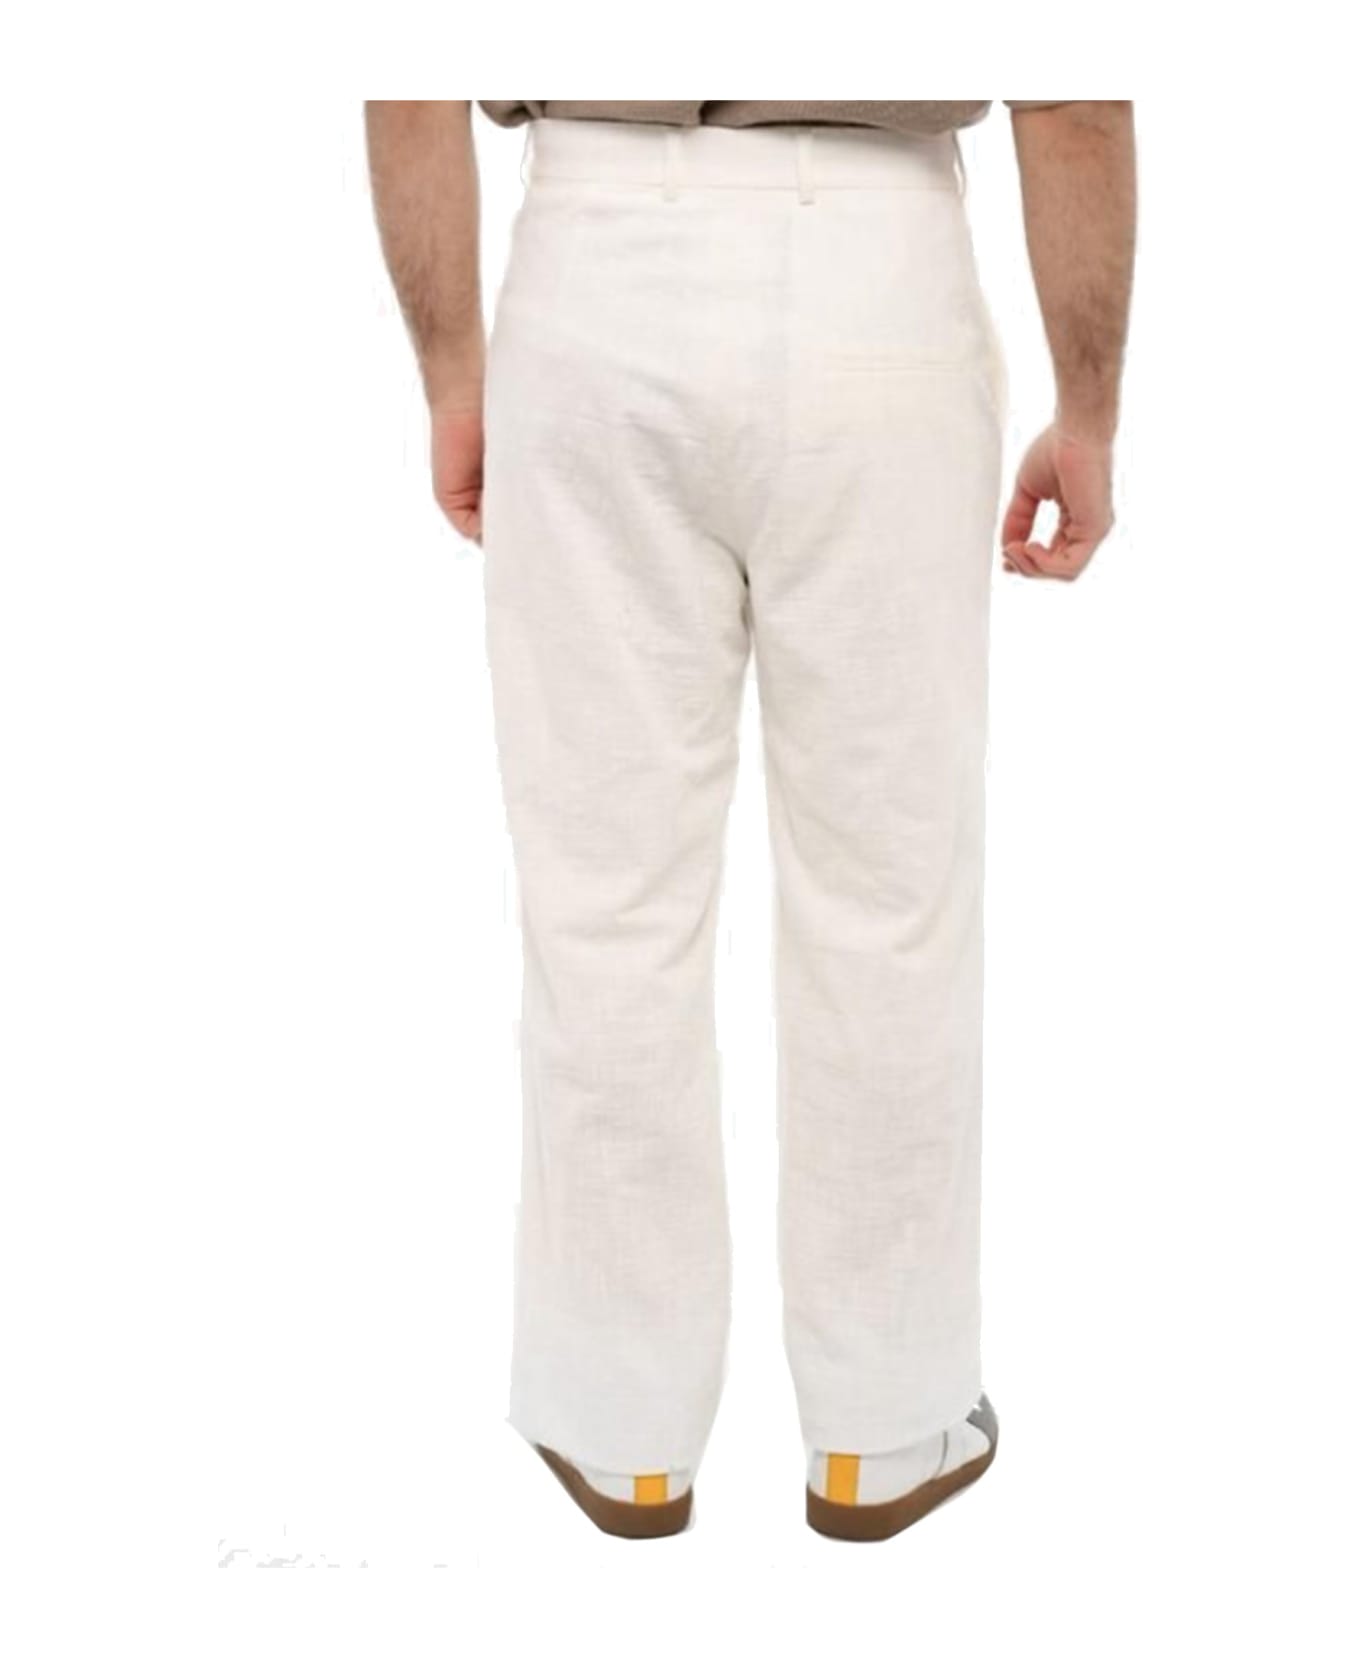 Casablanca Casablaca Cotton Wide-leg Pants - White ボトムス